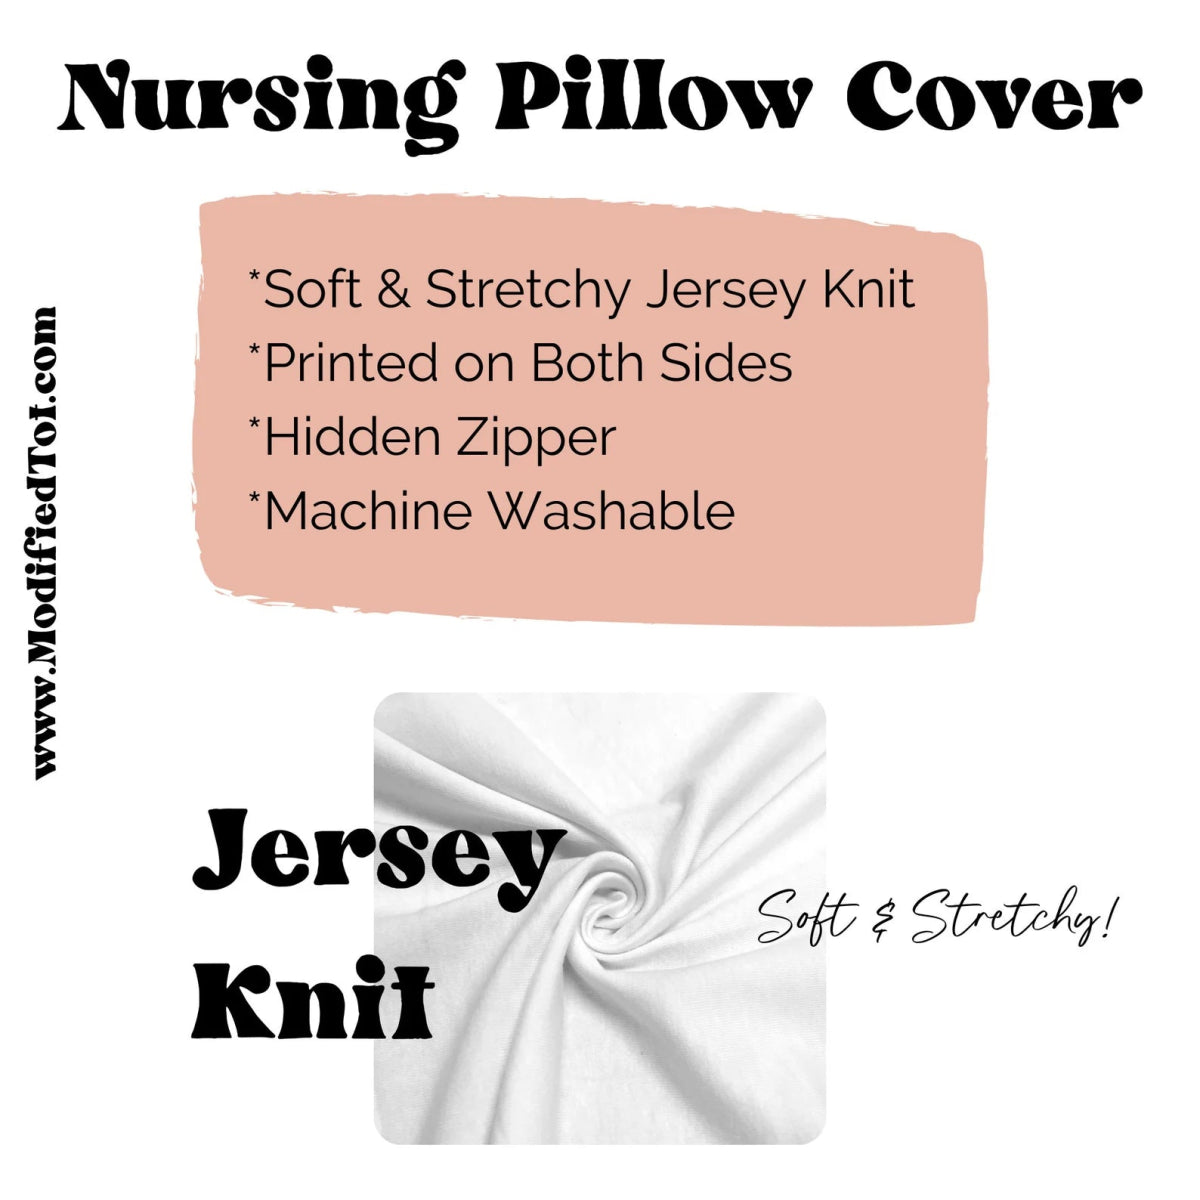 Pink Plaid Nursing Pillow Cover - Floral Woodlands, gender_girl, Theme_Floral